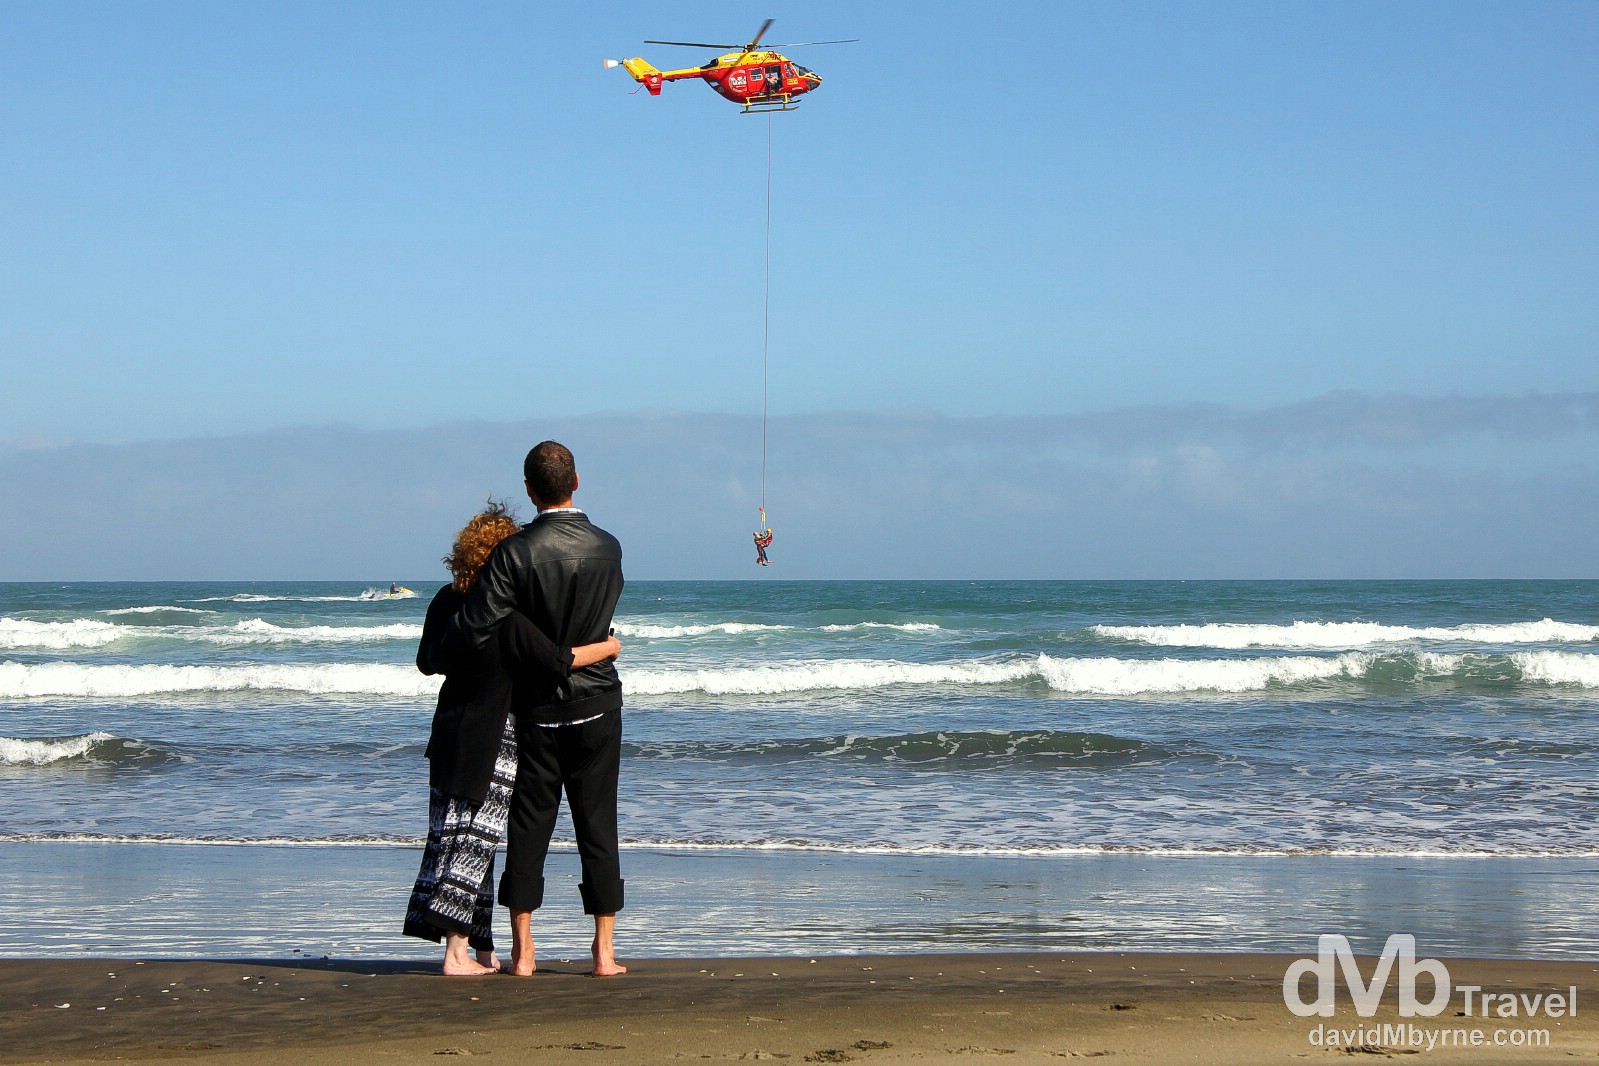 Coastguard rescue drills off the black sand Muriwai Beach, North Island, New Zealand. April 27th 2012.